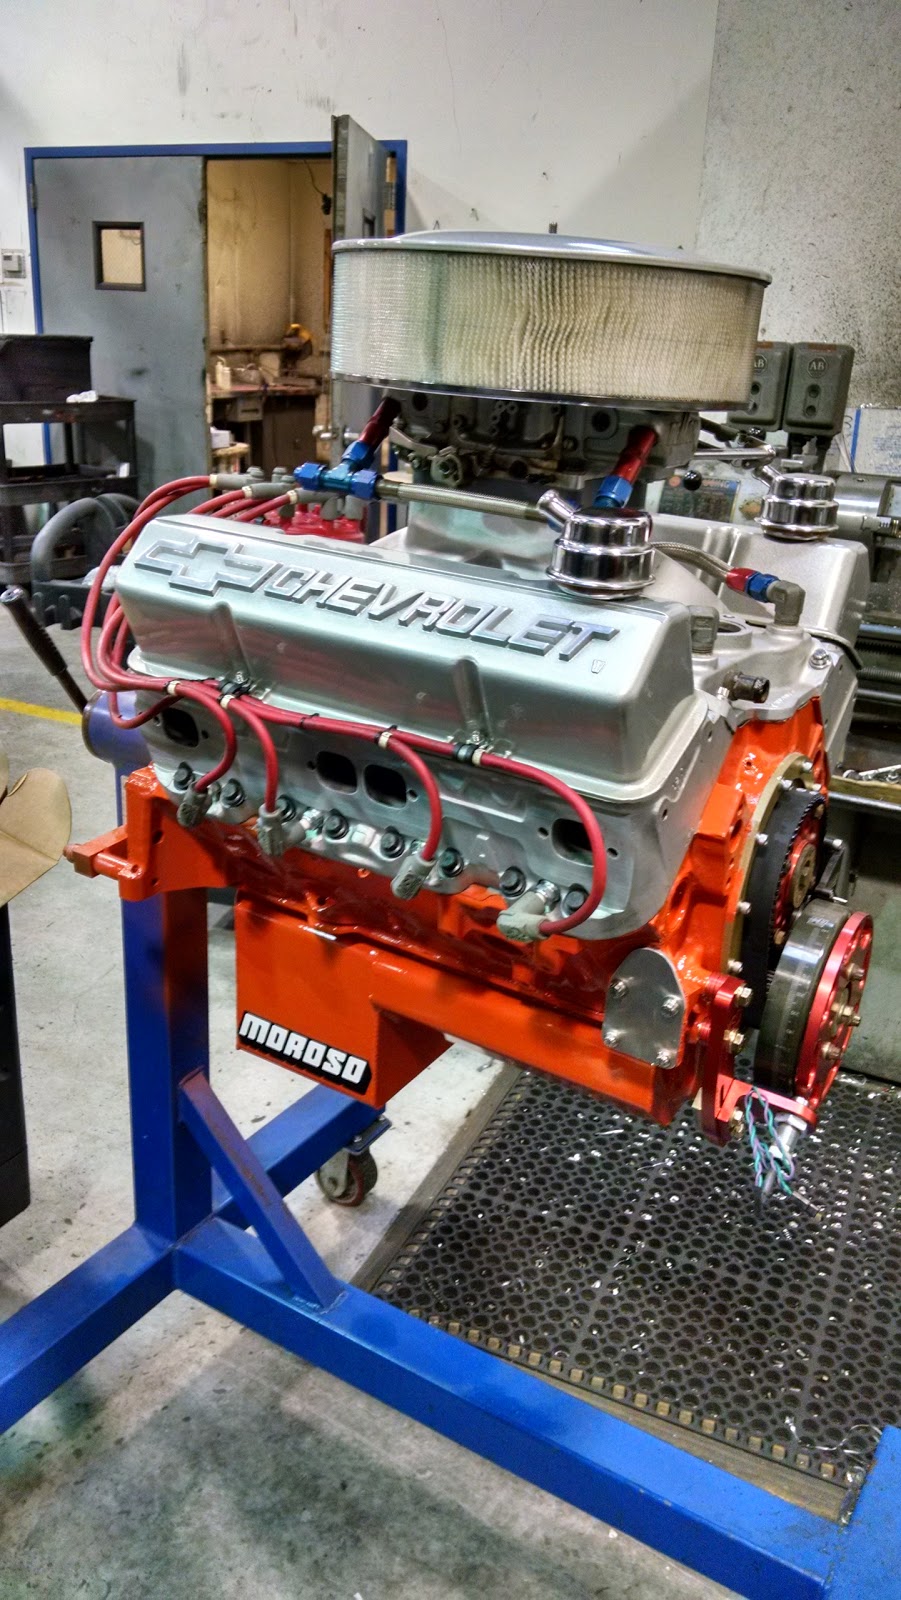 Scott Shafiroff Race Engines & Components | 35A Davinci Dr, Bohemia, NY 11716 | Phone: (800) 295-7142